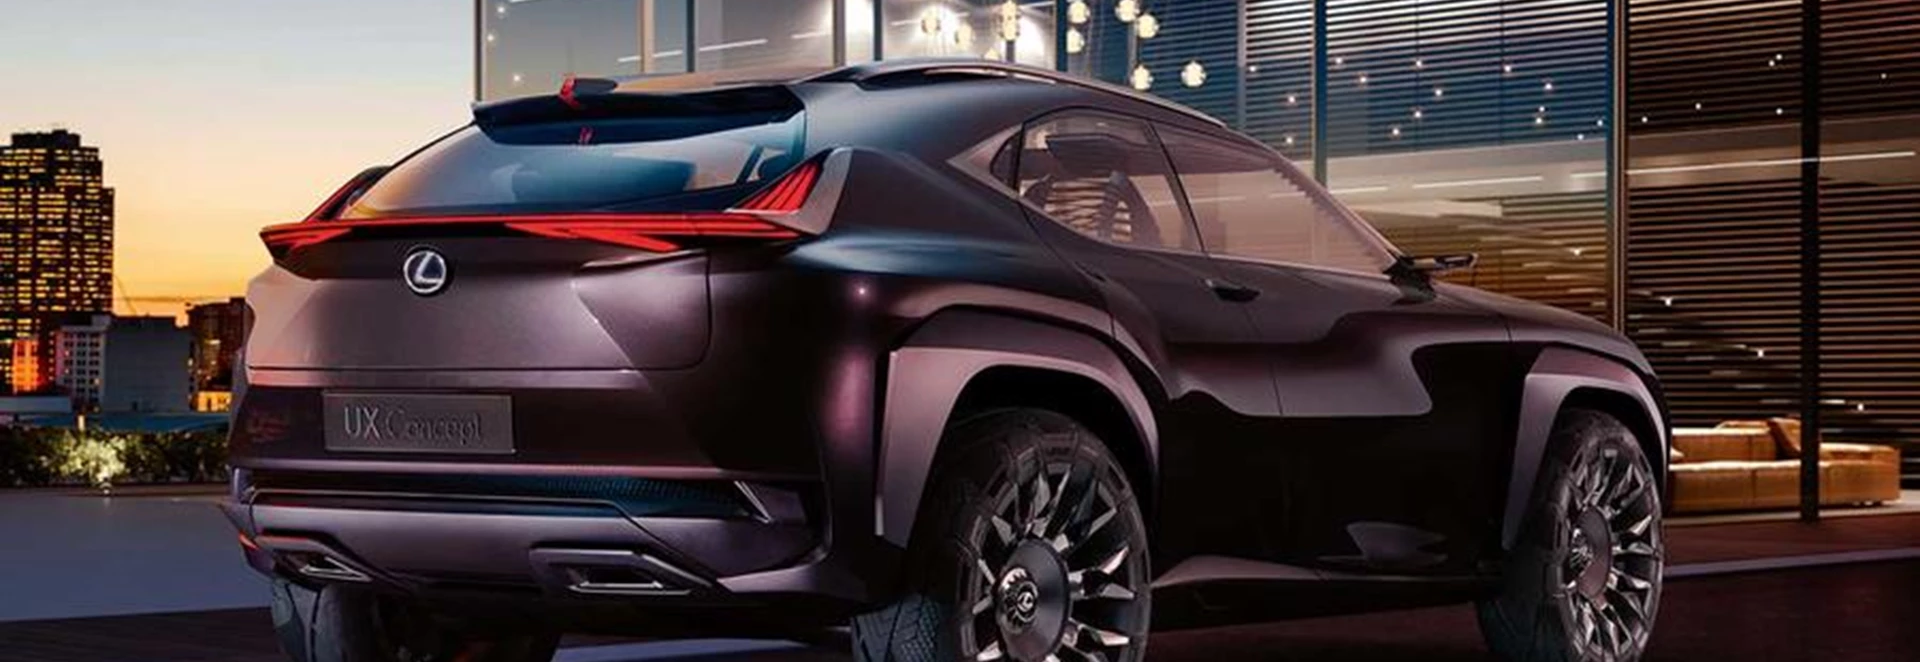 This Lexus SUV concept has no mirrors 